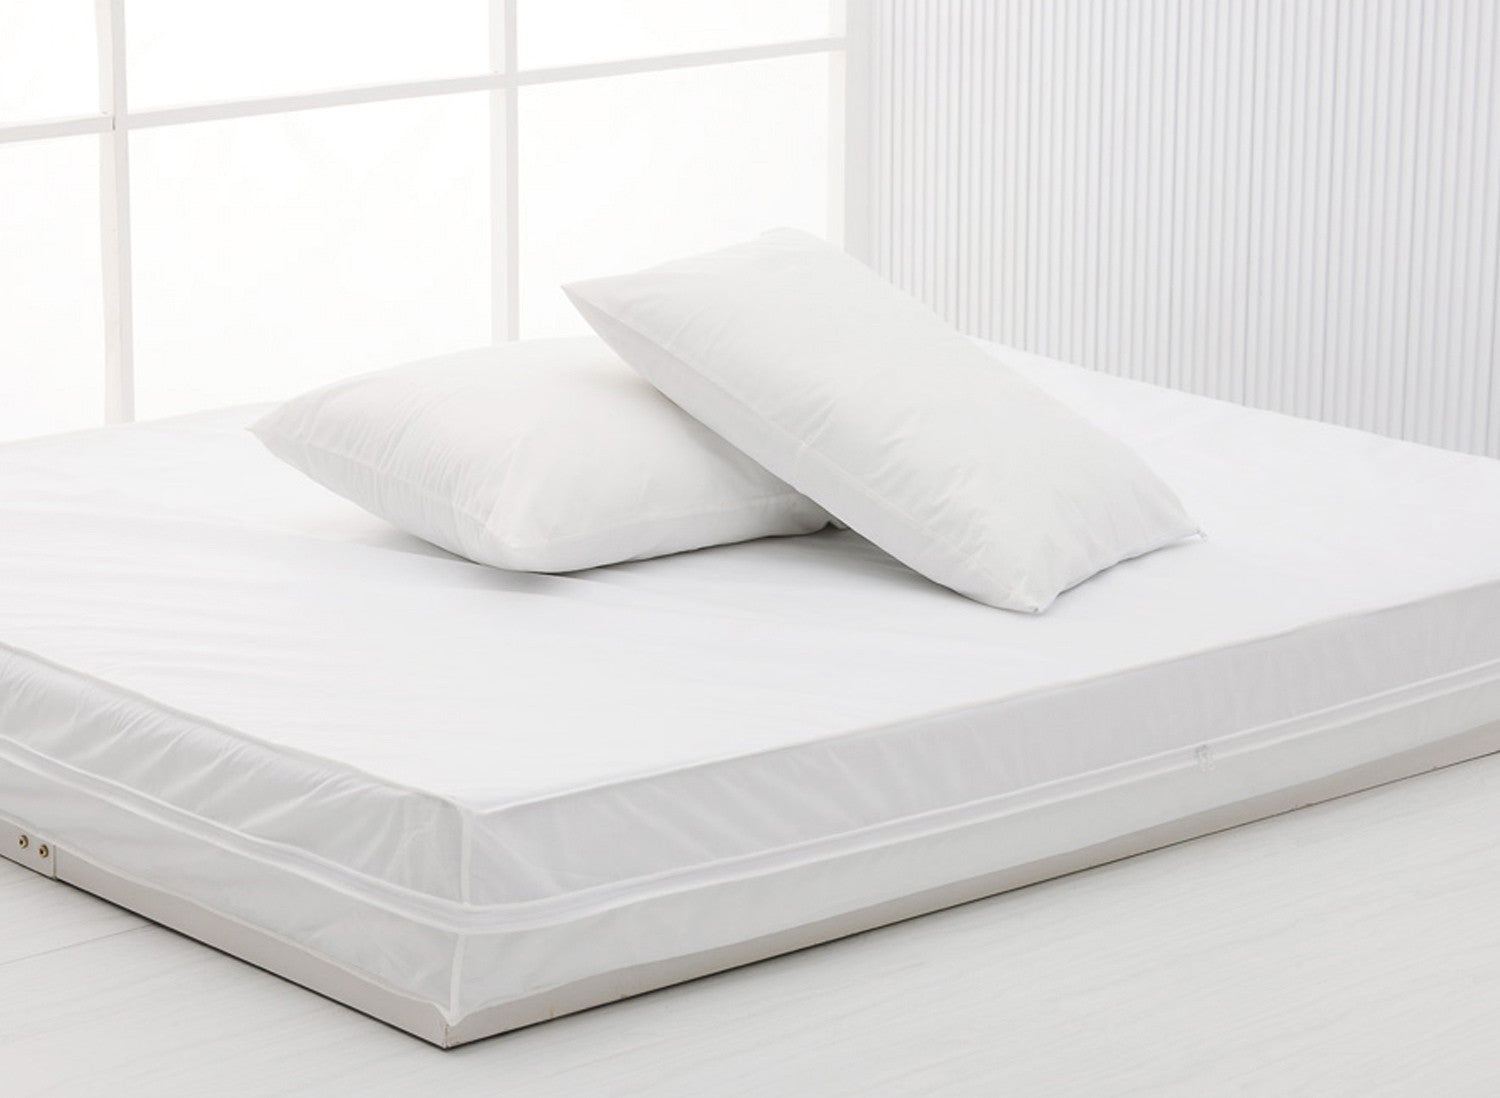 Permafresh Antibacterial Mattress and Pillow Protector Set